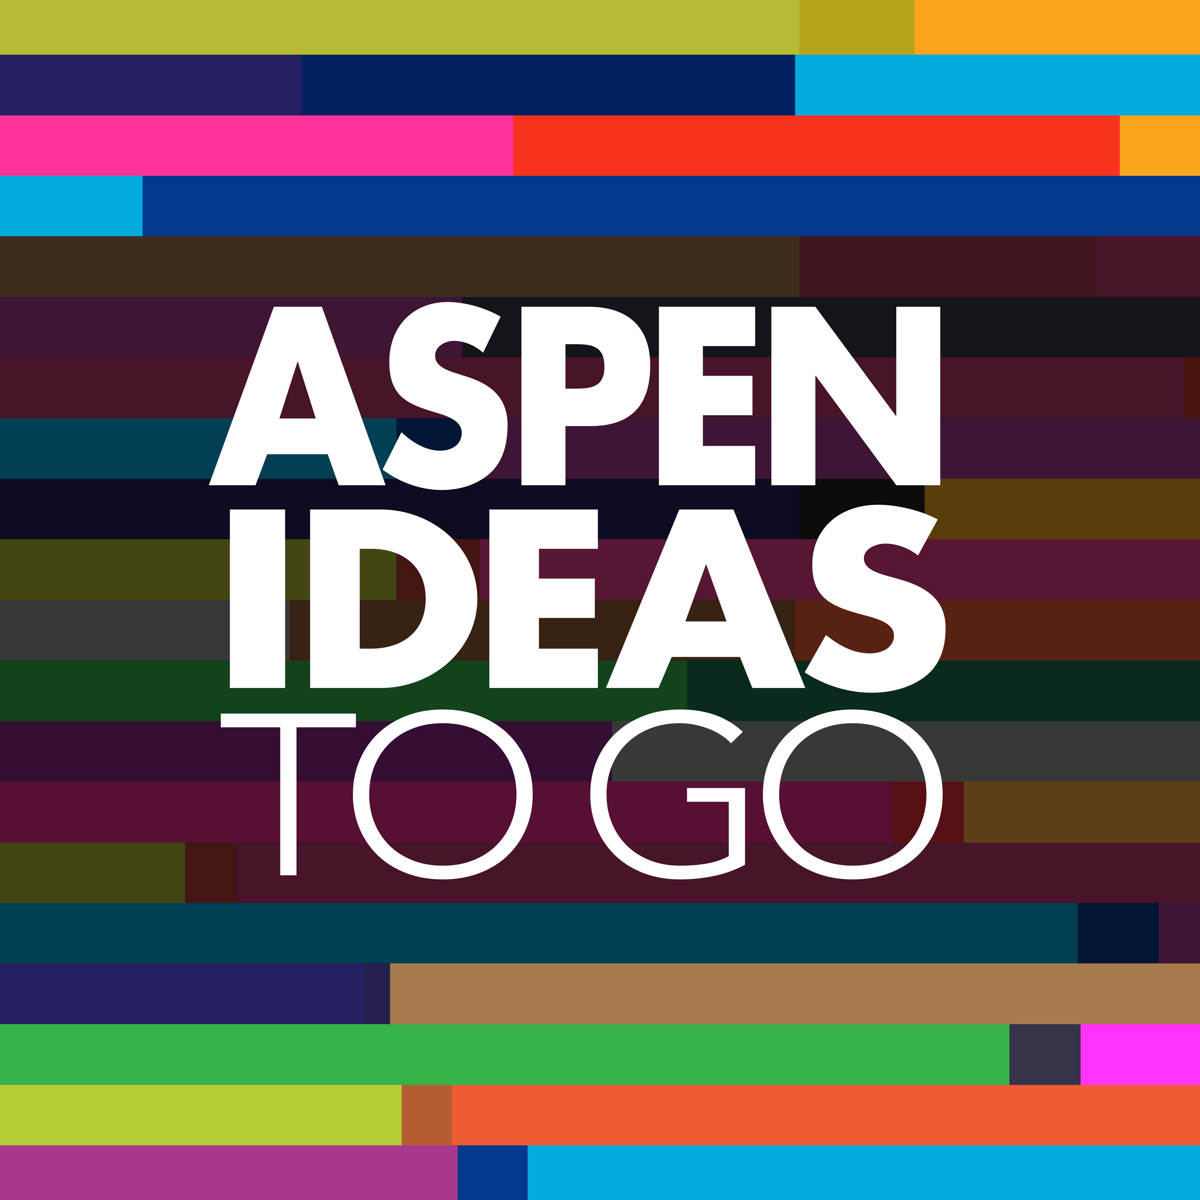 Aspen Ideas To Go